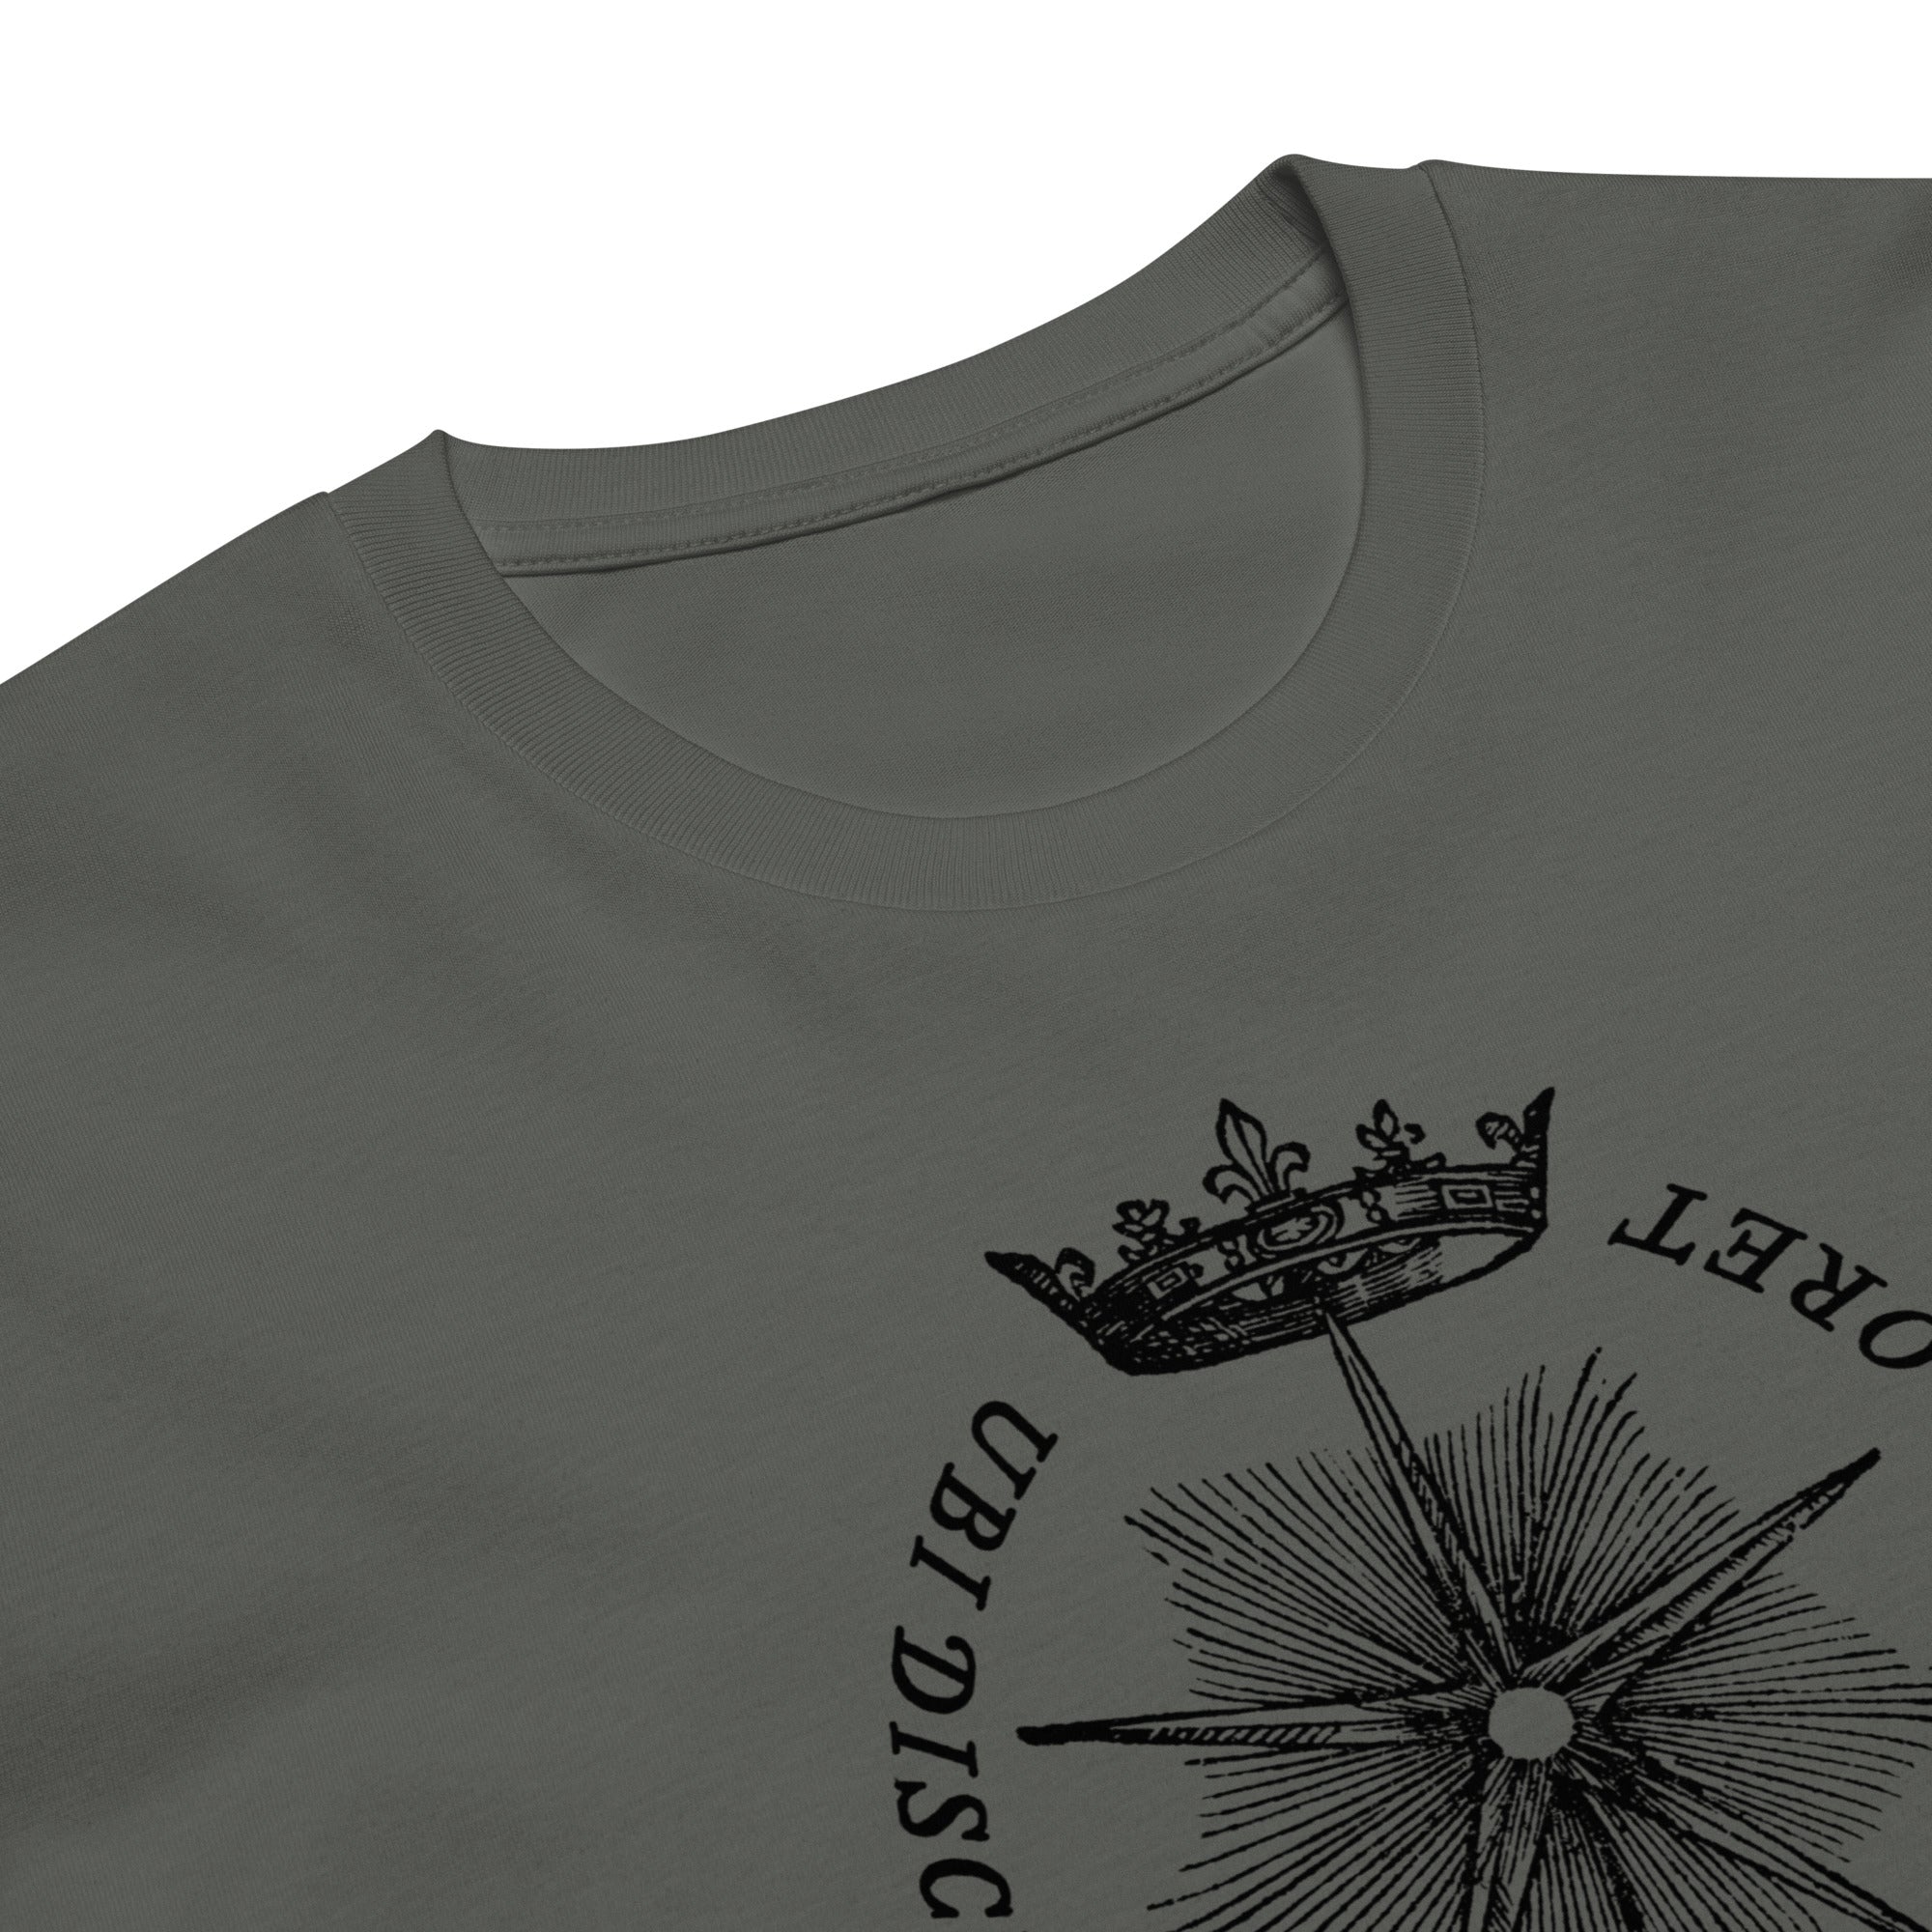 Where Discipline Reigns Liberty Flourishes Graphic T-Shirt